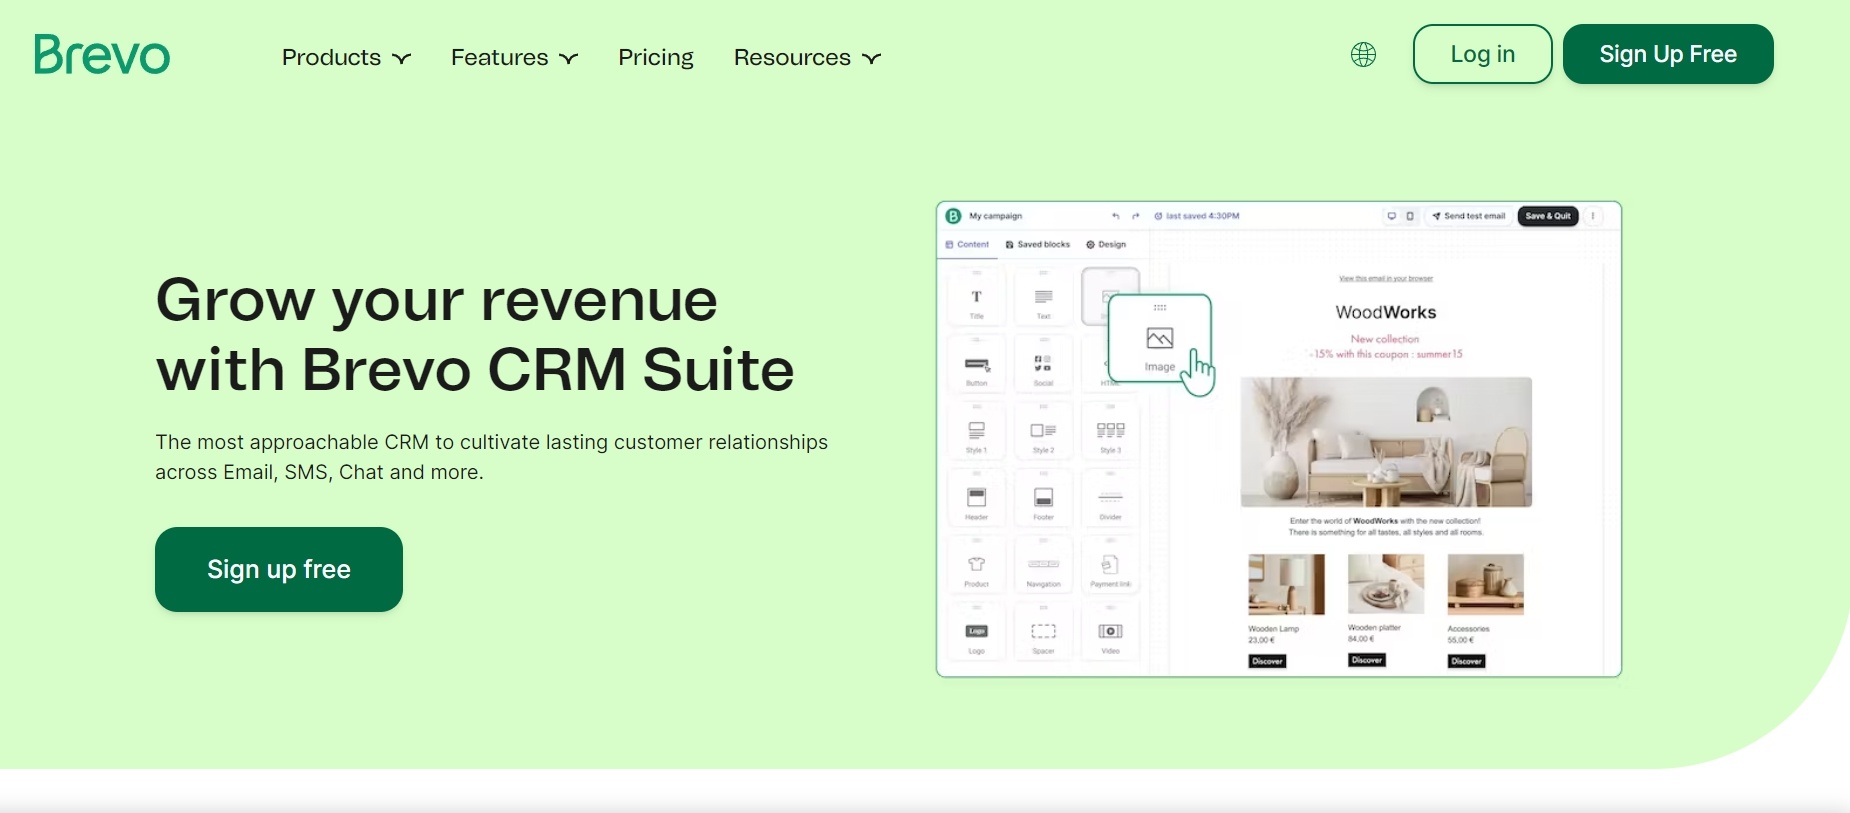 Brevo CRM suite for growing your business revenue via effective lead management